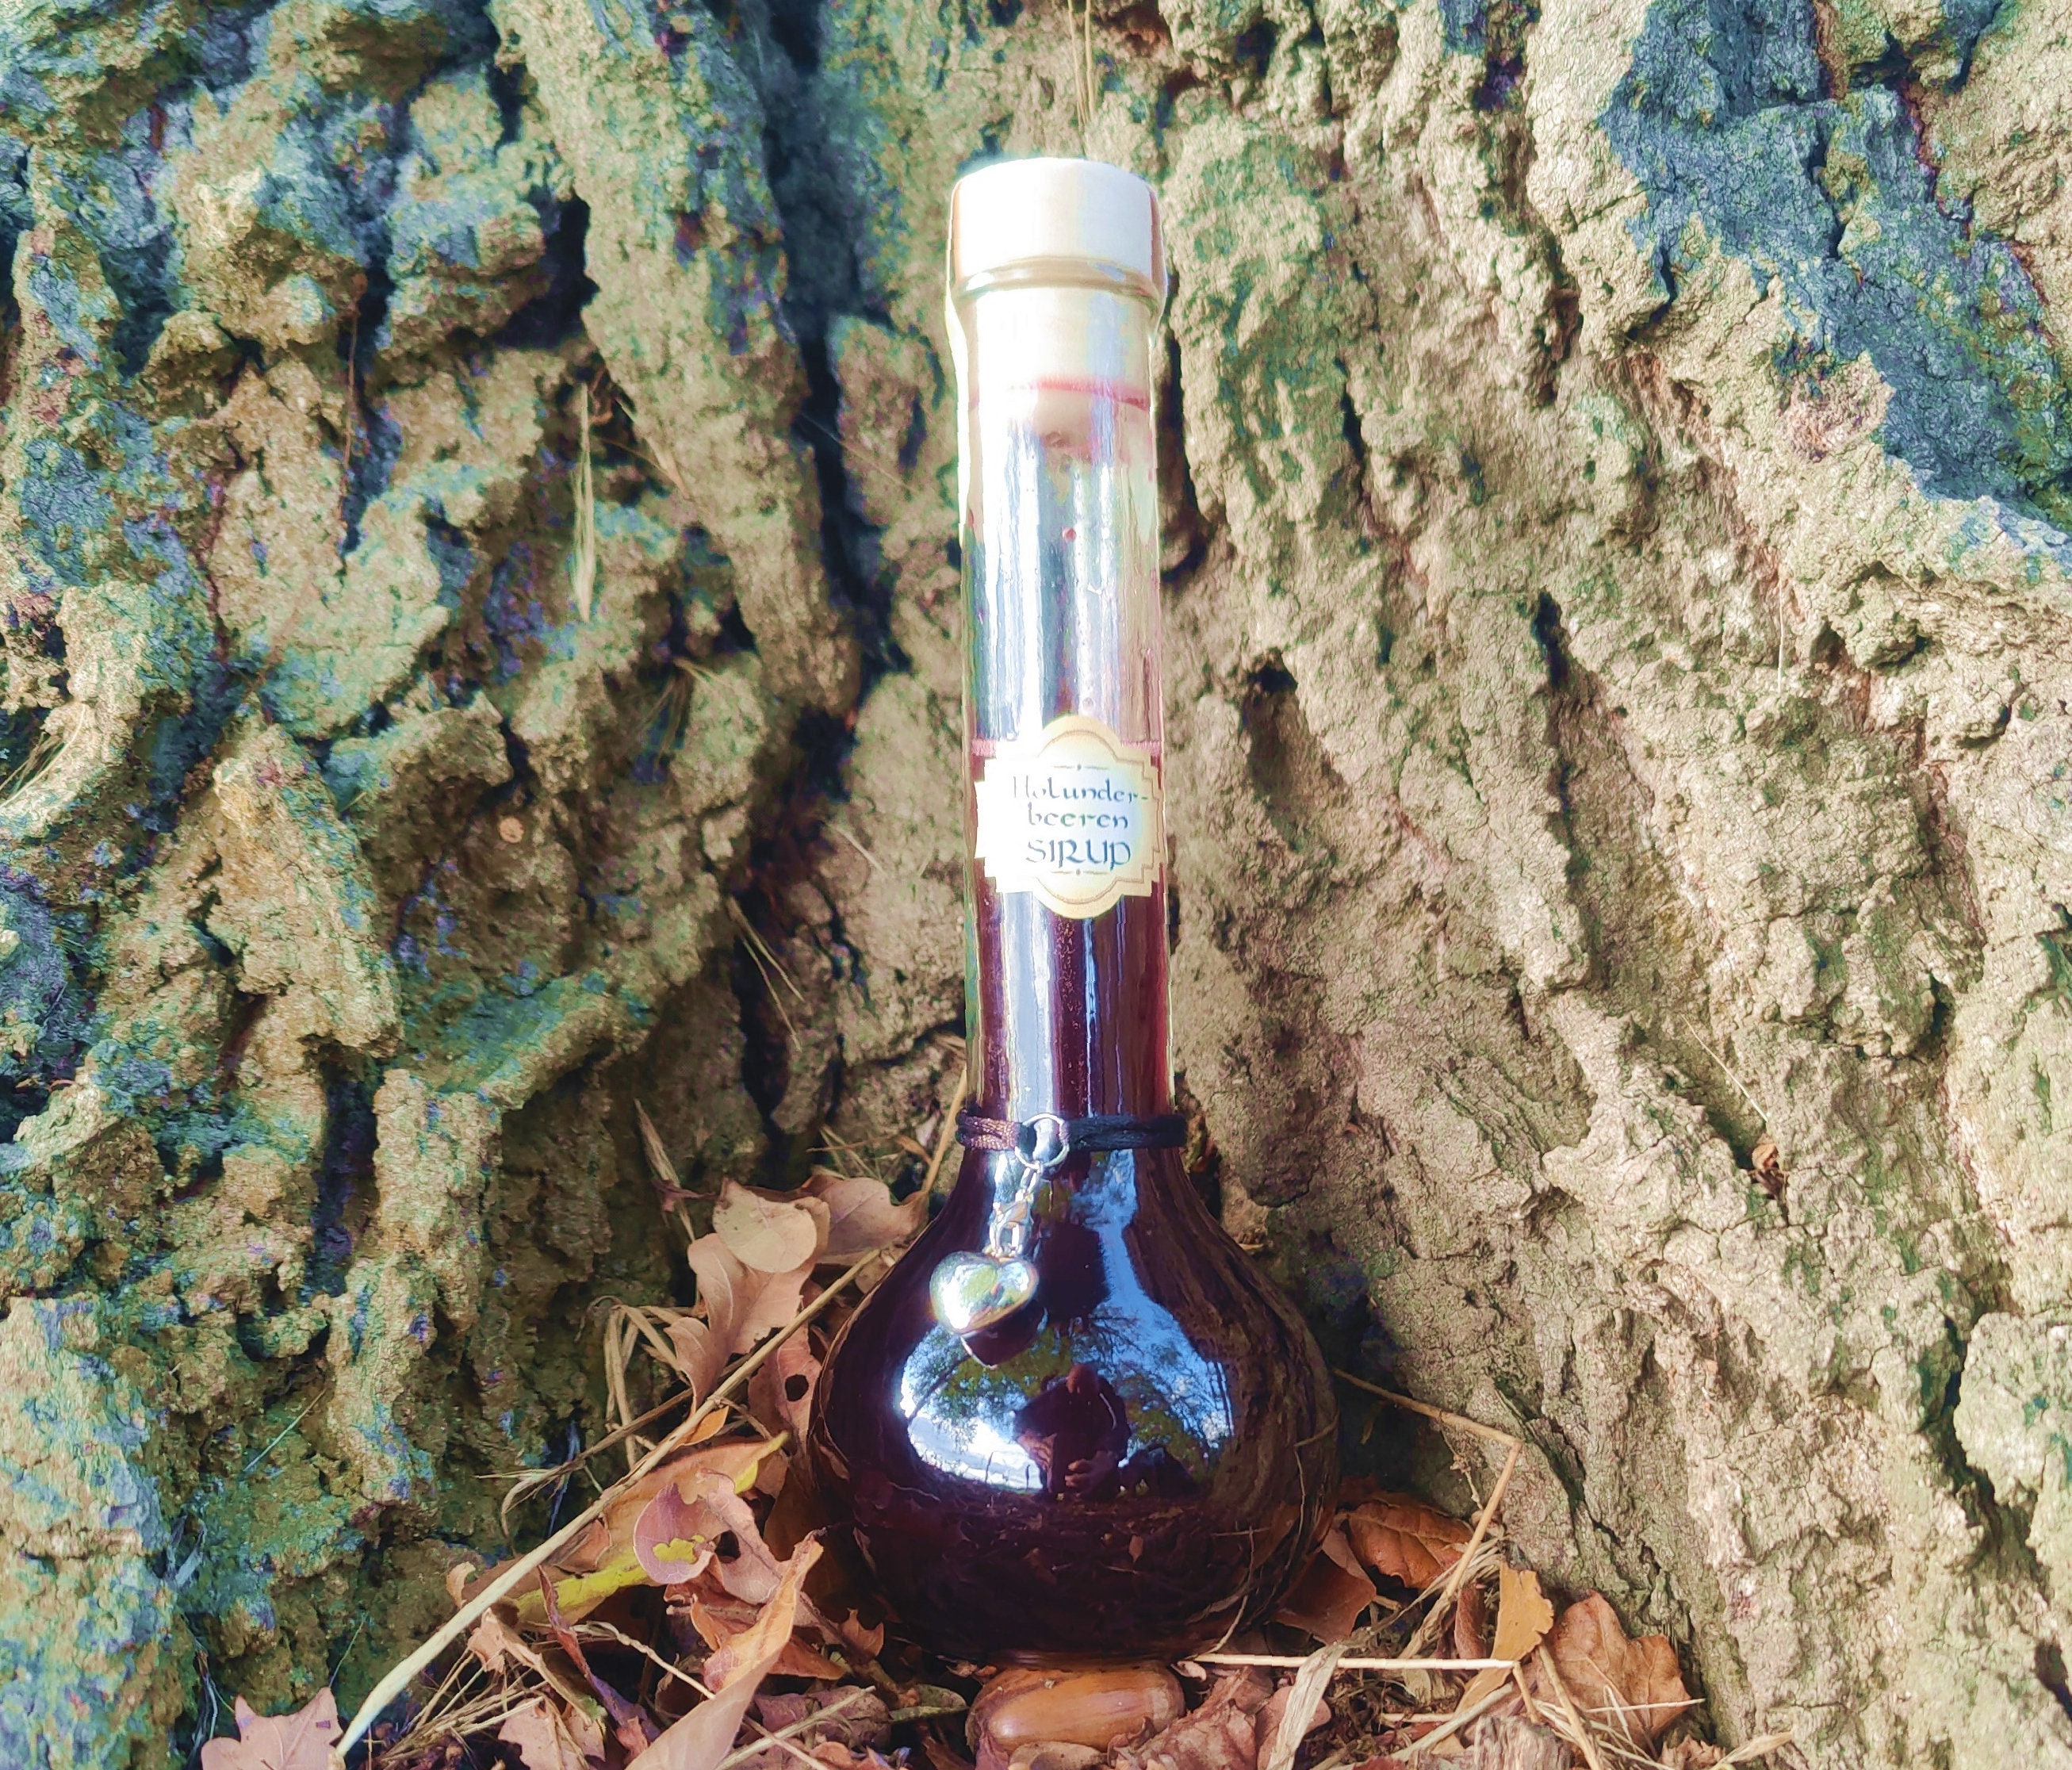 Mini Parfüm-Diffusor Auto Aroma therapie Glasflasche Neu  Duft-Pendent-Flasche